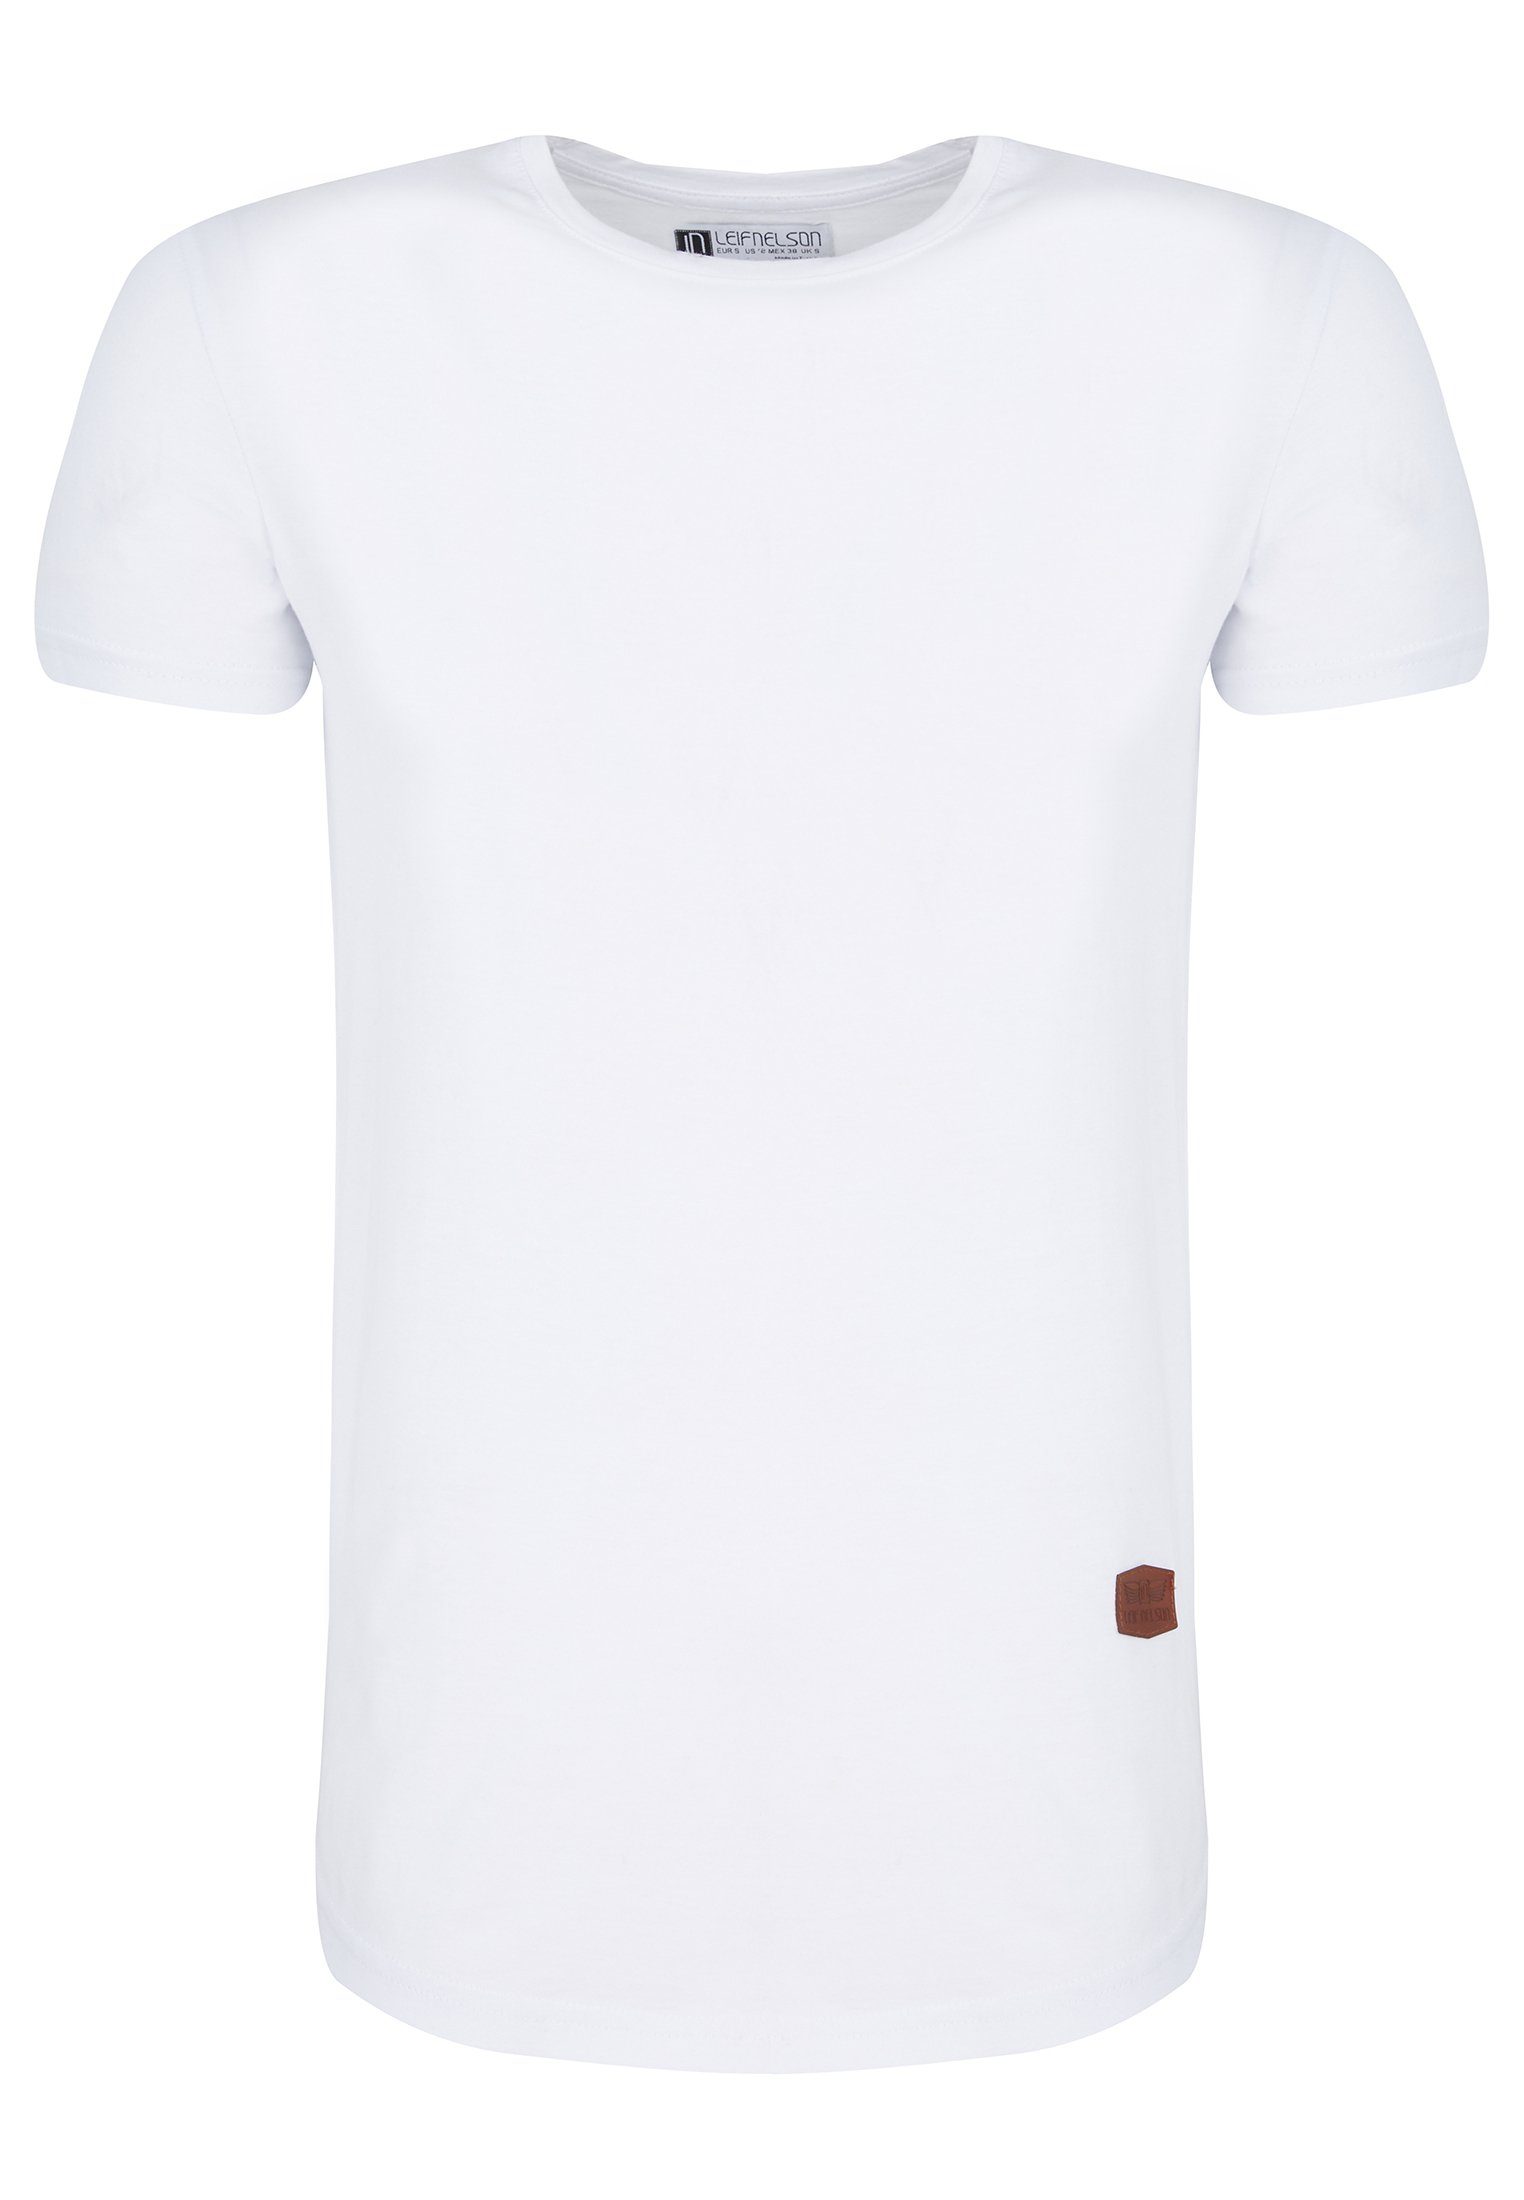 Leif Nelson LN-8294 Herren T-Shirt T-Shirt Rundhals weiß